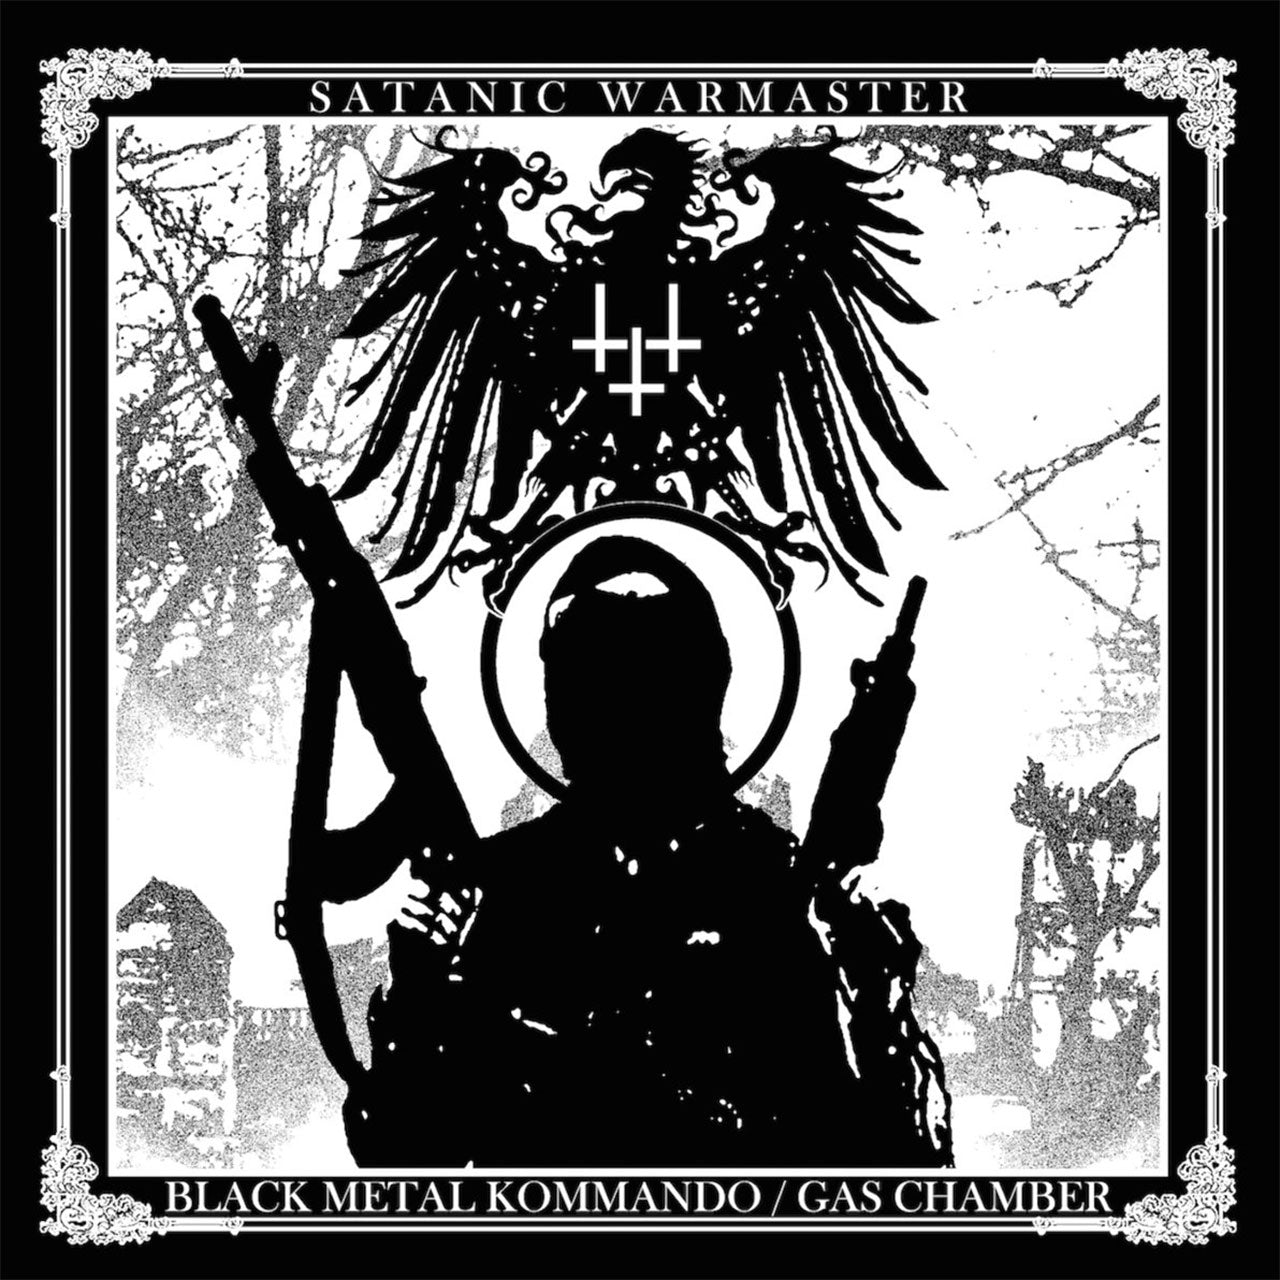 Satanic Warmaster - Black Metal Kommando / Gas Chamber (2016 Reissue) (CD)